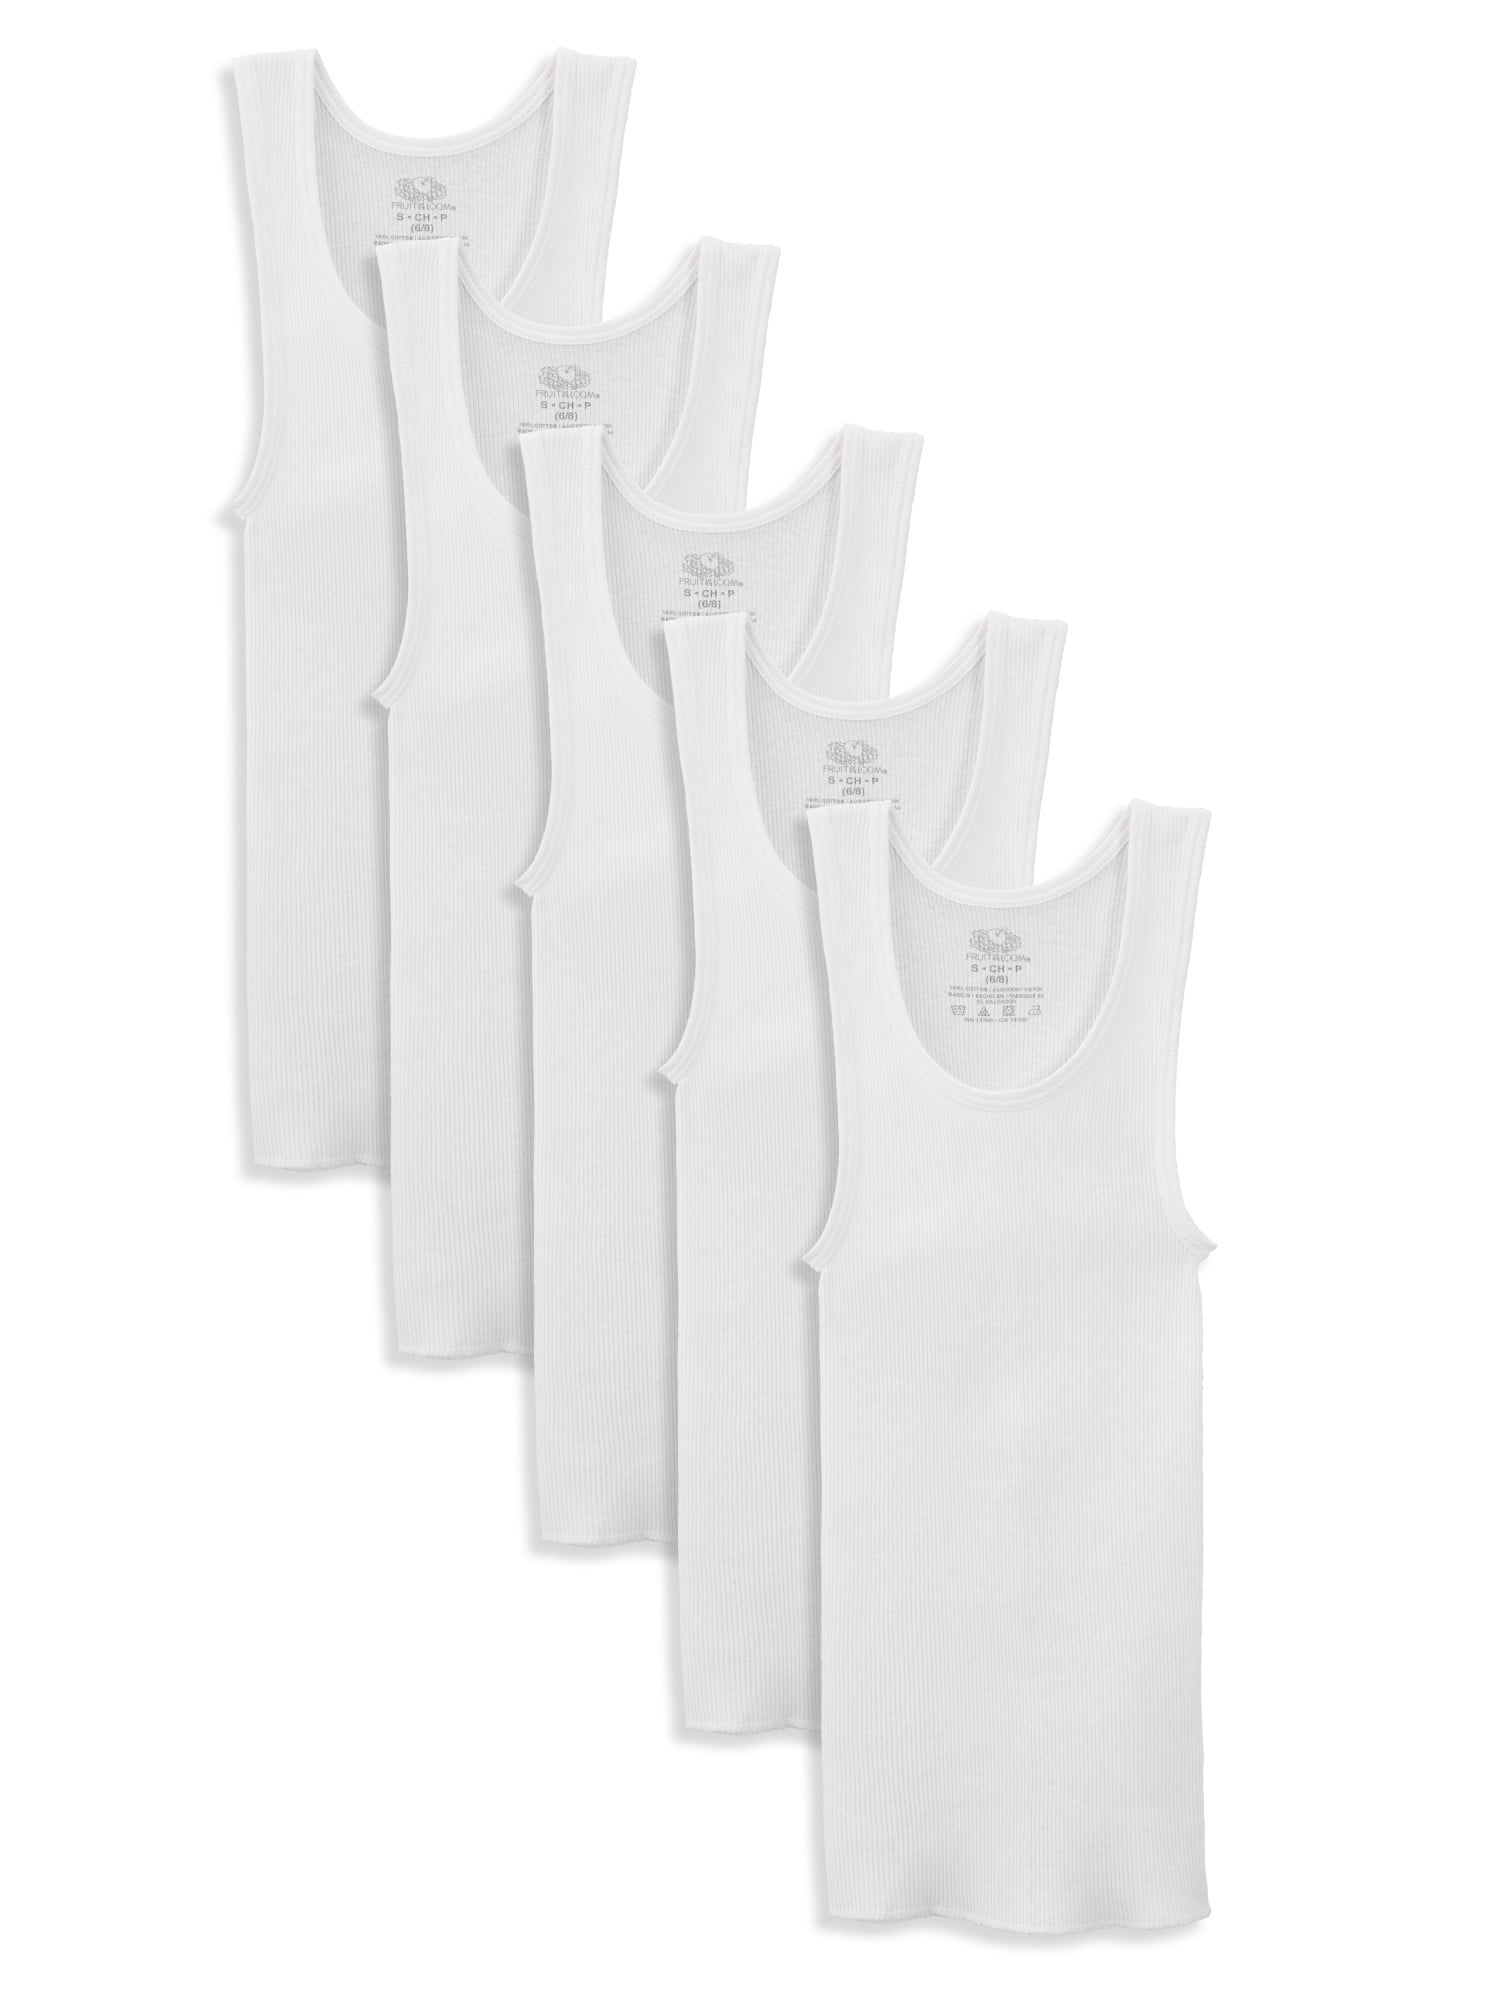 White Sleeveless Tank Tops Undershirts 2pack 3set 5set TINFL 100% Cotton Toddler Kids Boys Multipack